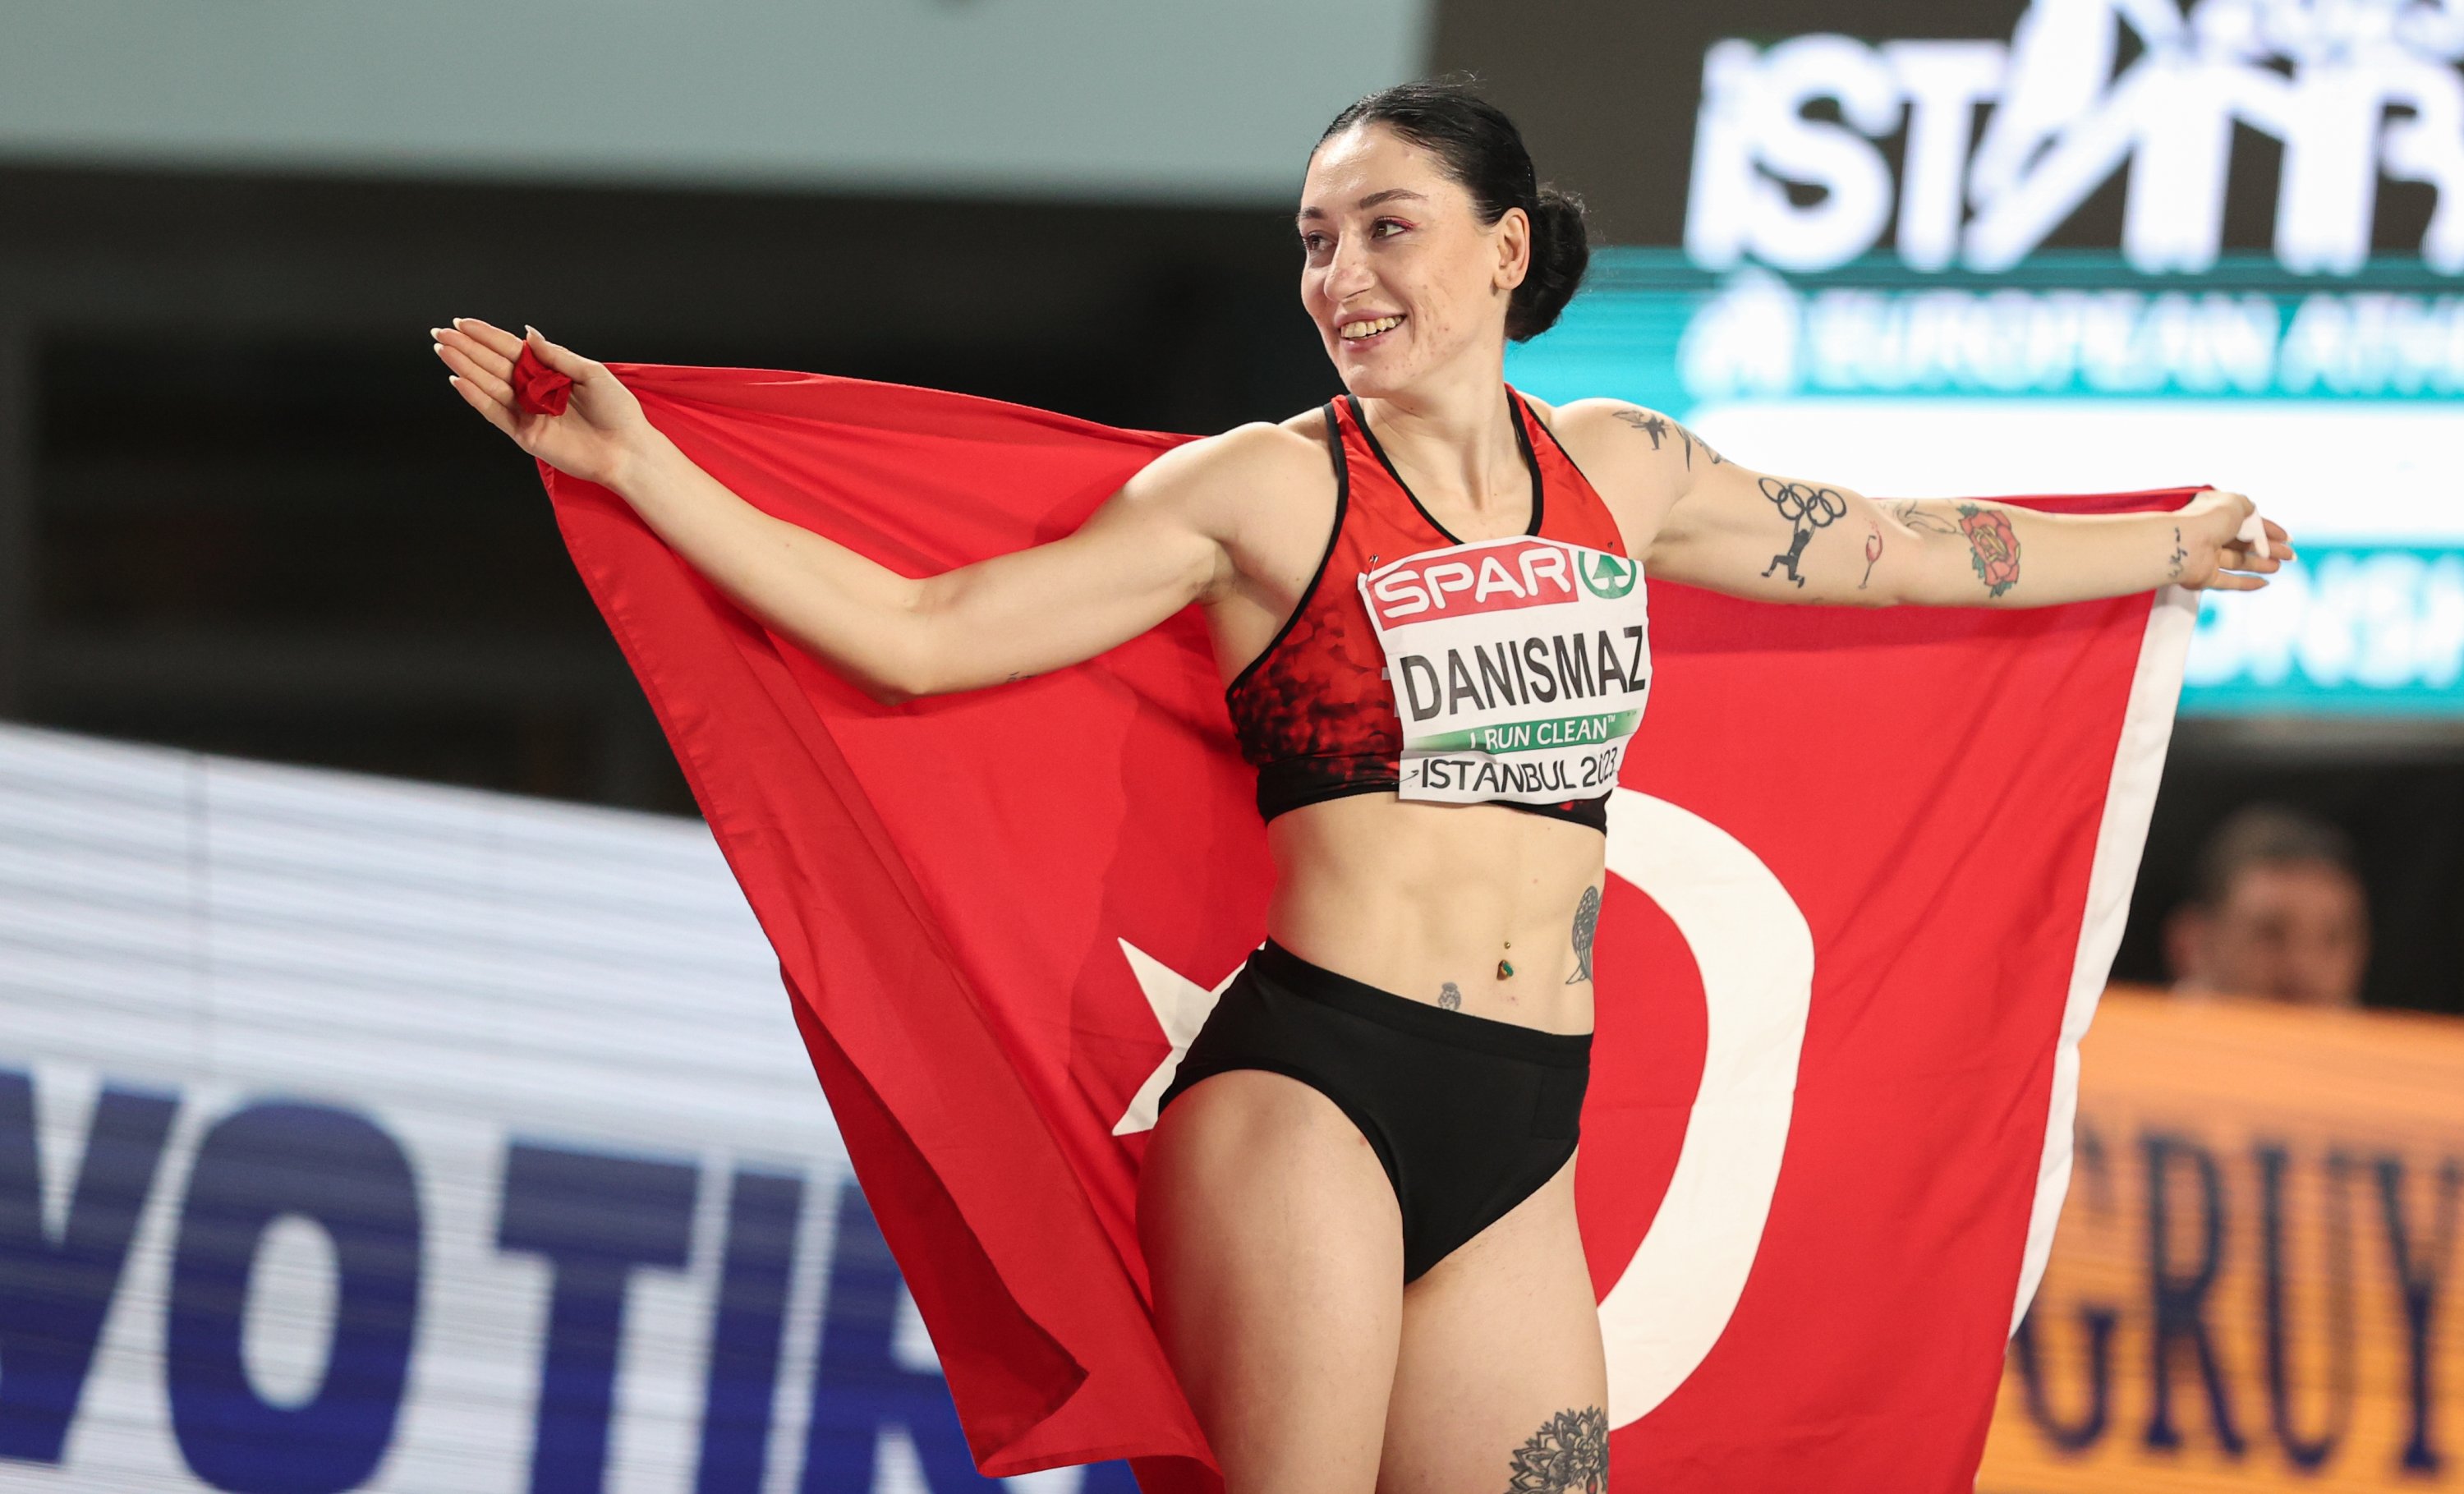 Tuğba Danışmaz dari Türkiye merayakan setelah memenangkan medali emas dalam kategori lompat tiga langkah putri di Kejuaraan Atletik Dalam Ruangan Eropa 2023, Istanbul, Türkiye, 5 Maret 2023. (Foto AA)